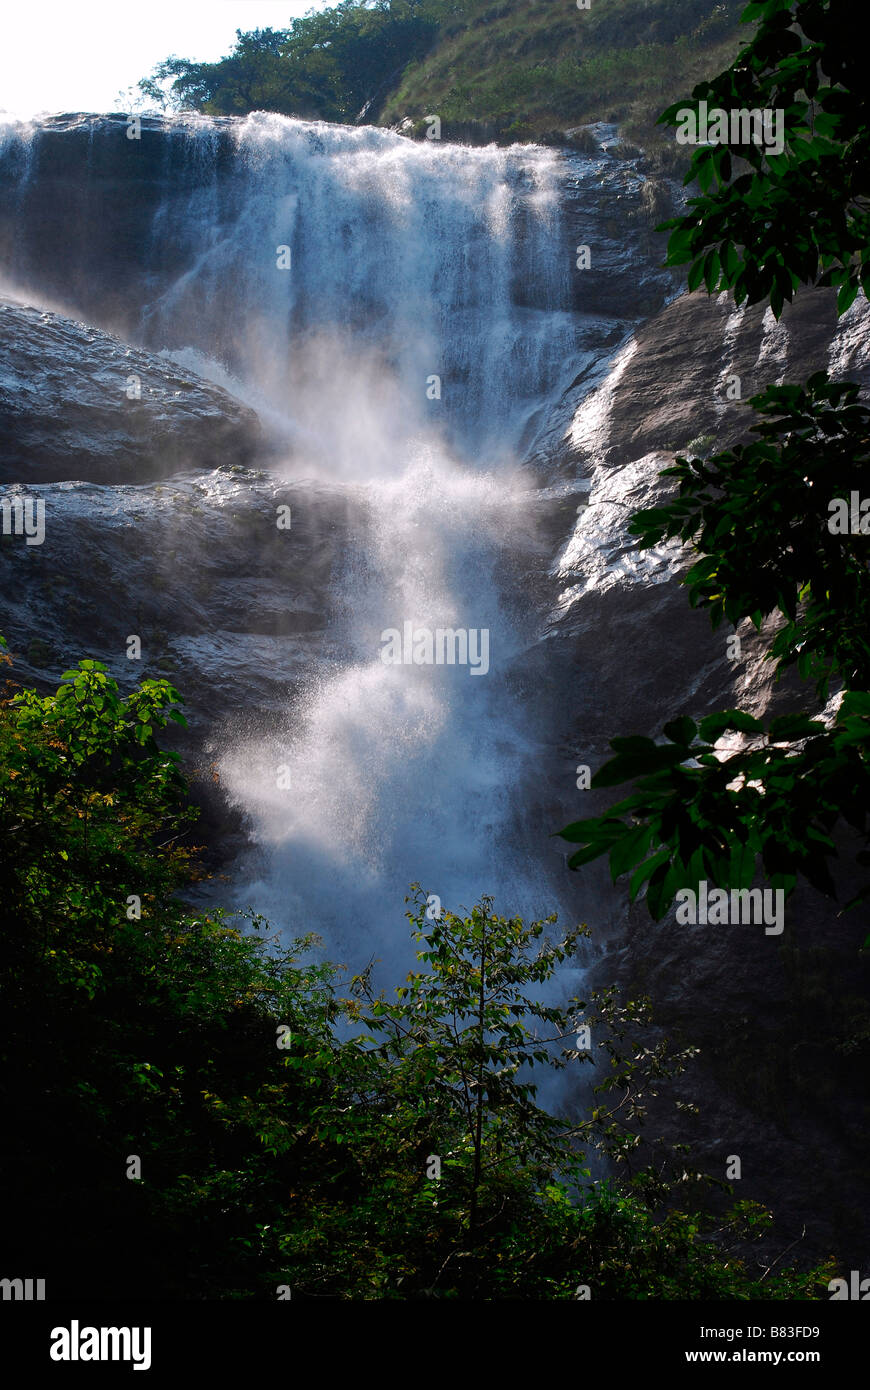 Palaruvi falls in Kerala, India Stock Photo